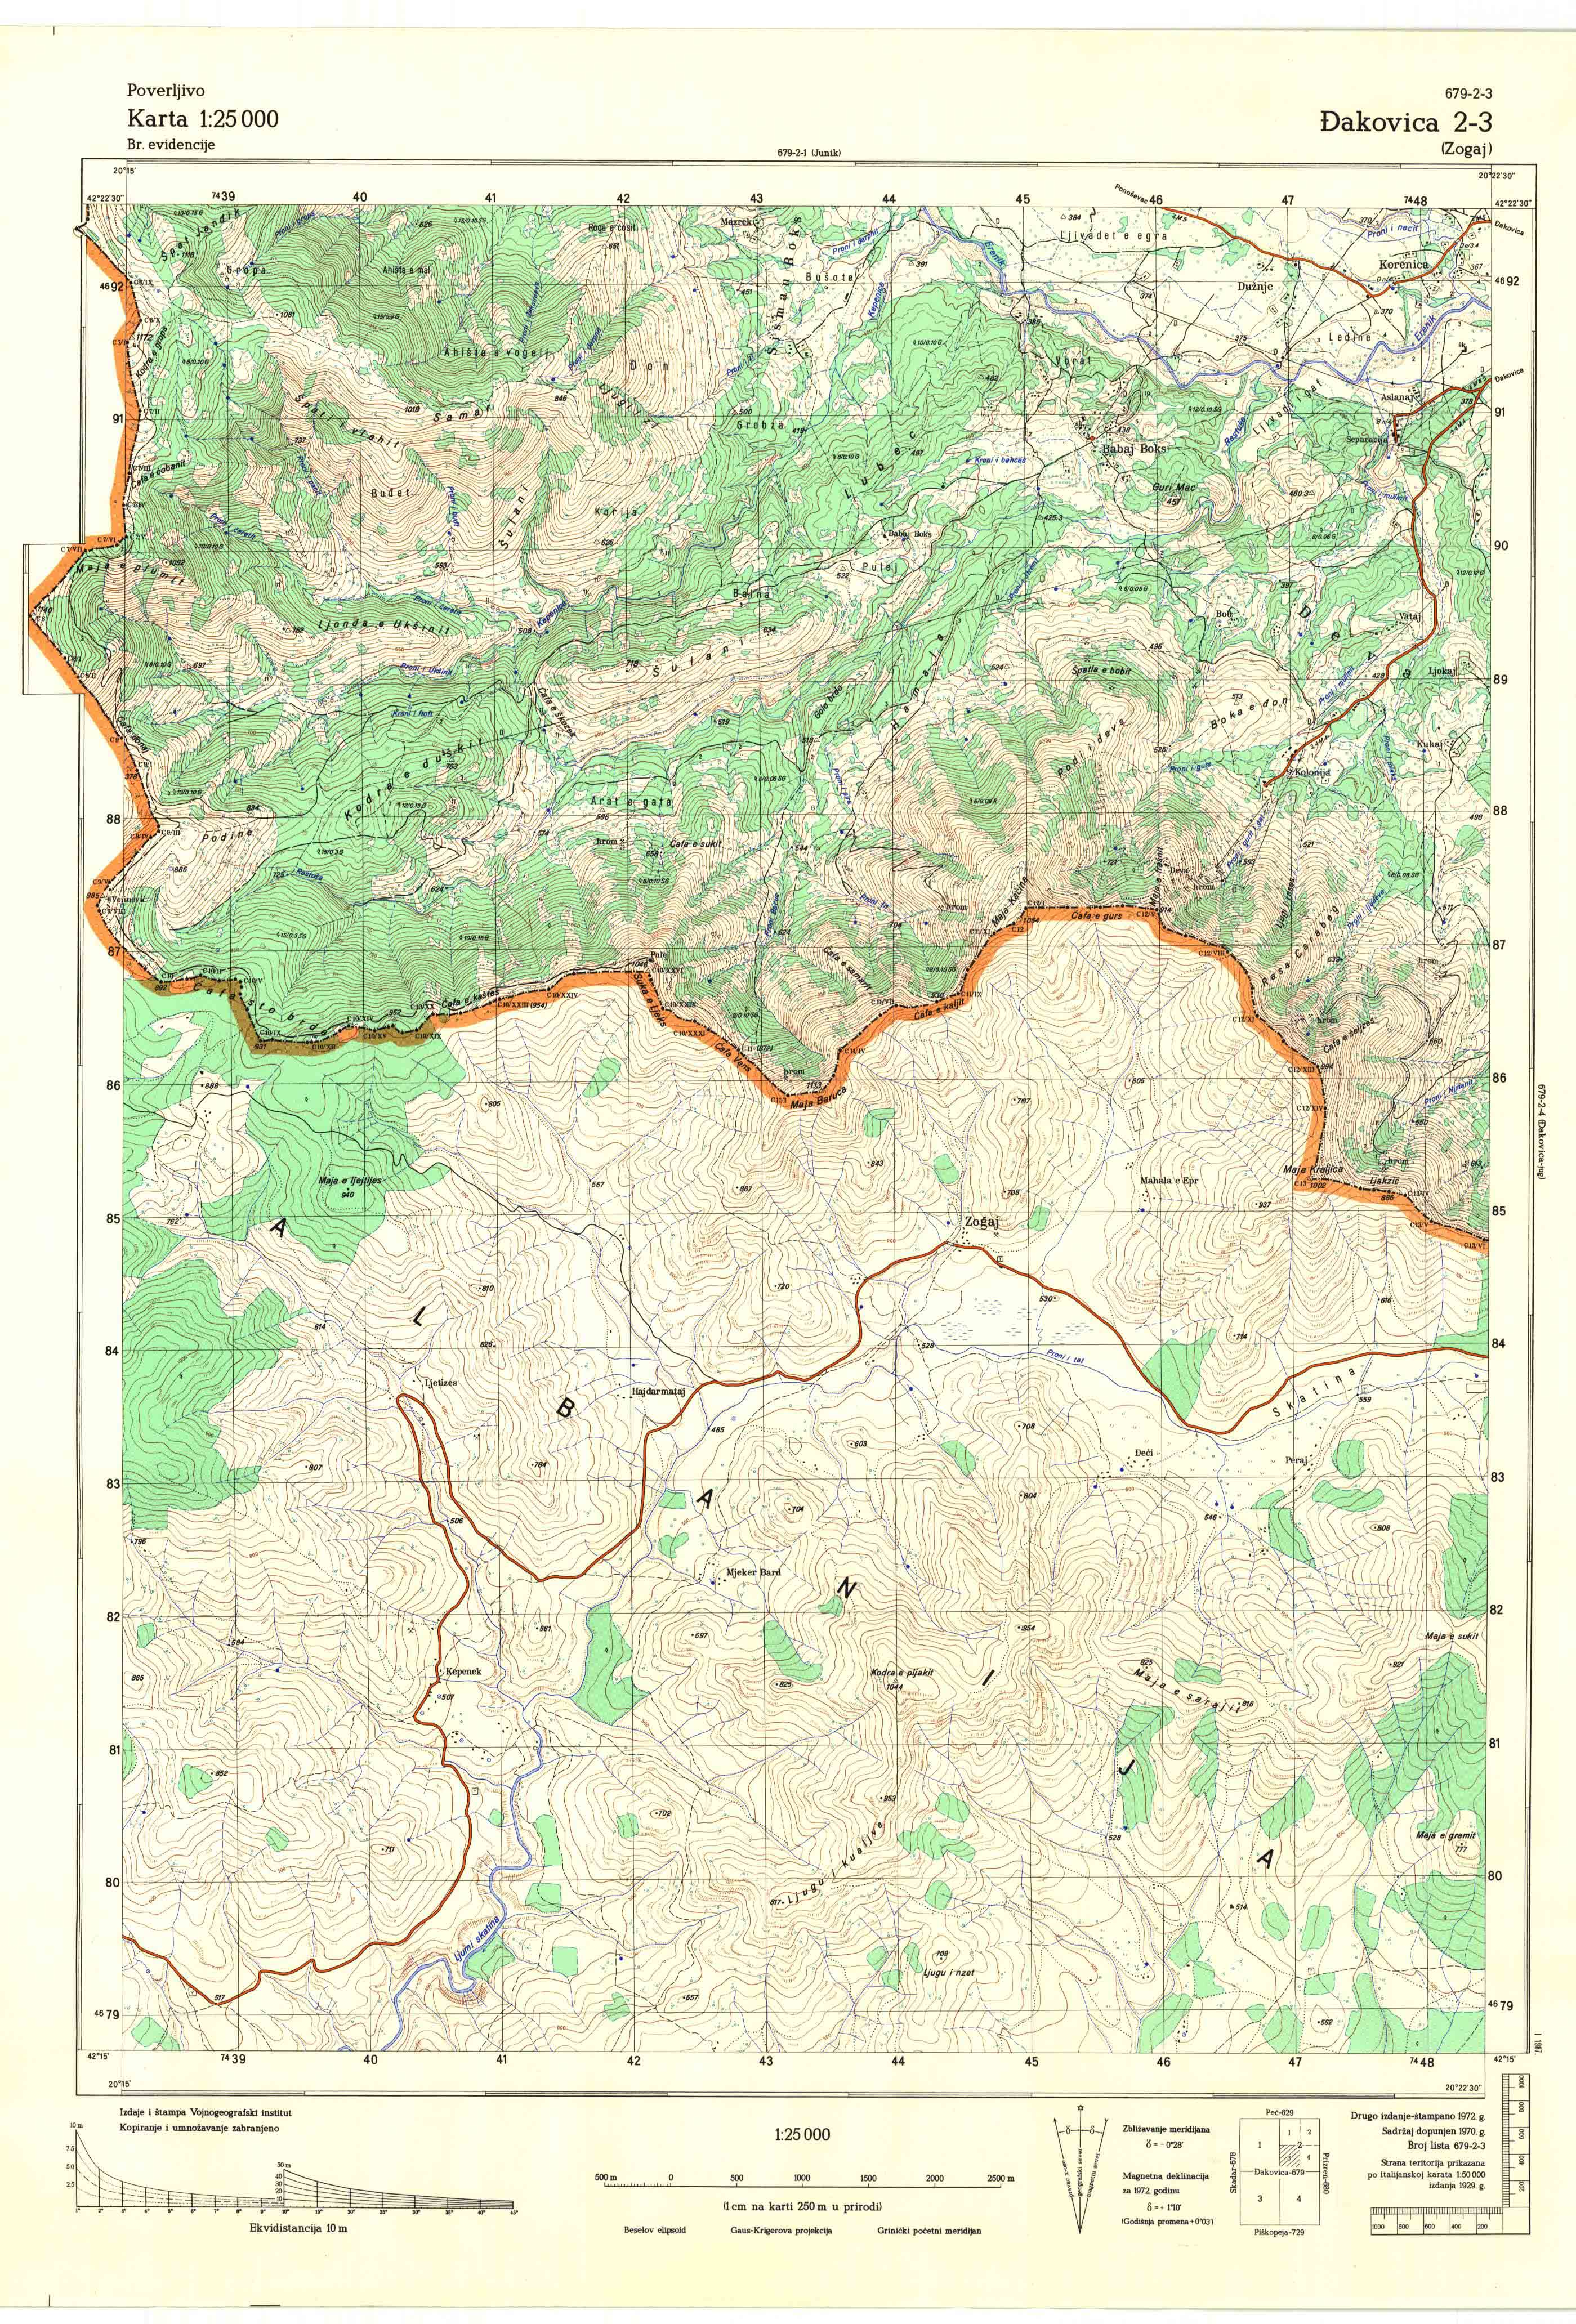  topografske karte kosove 25000 JNA  Đakovica